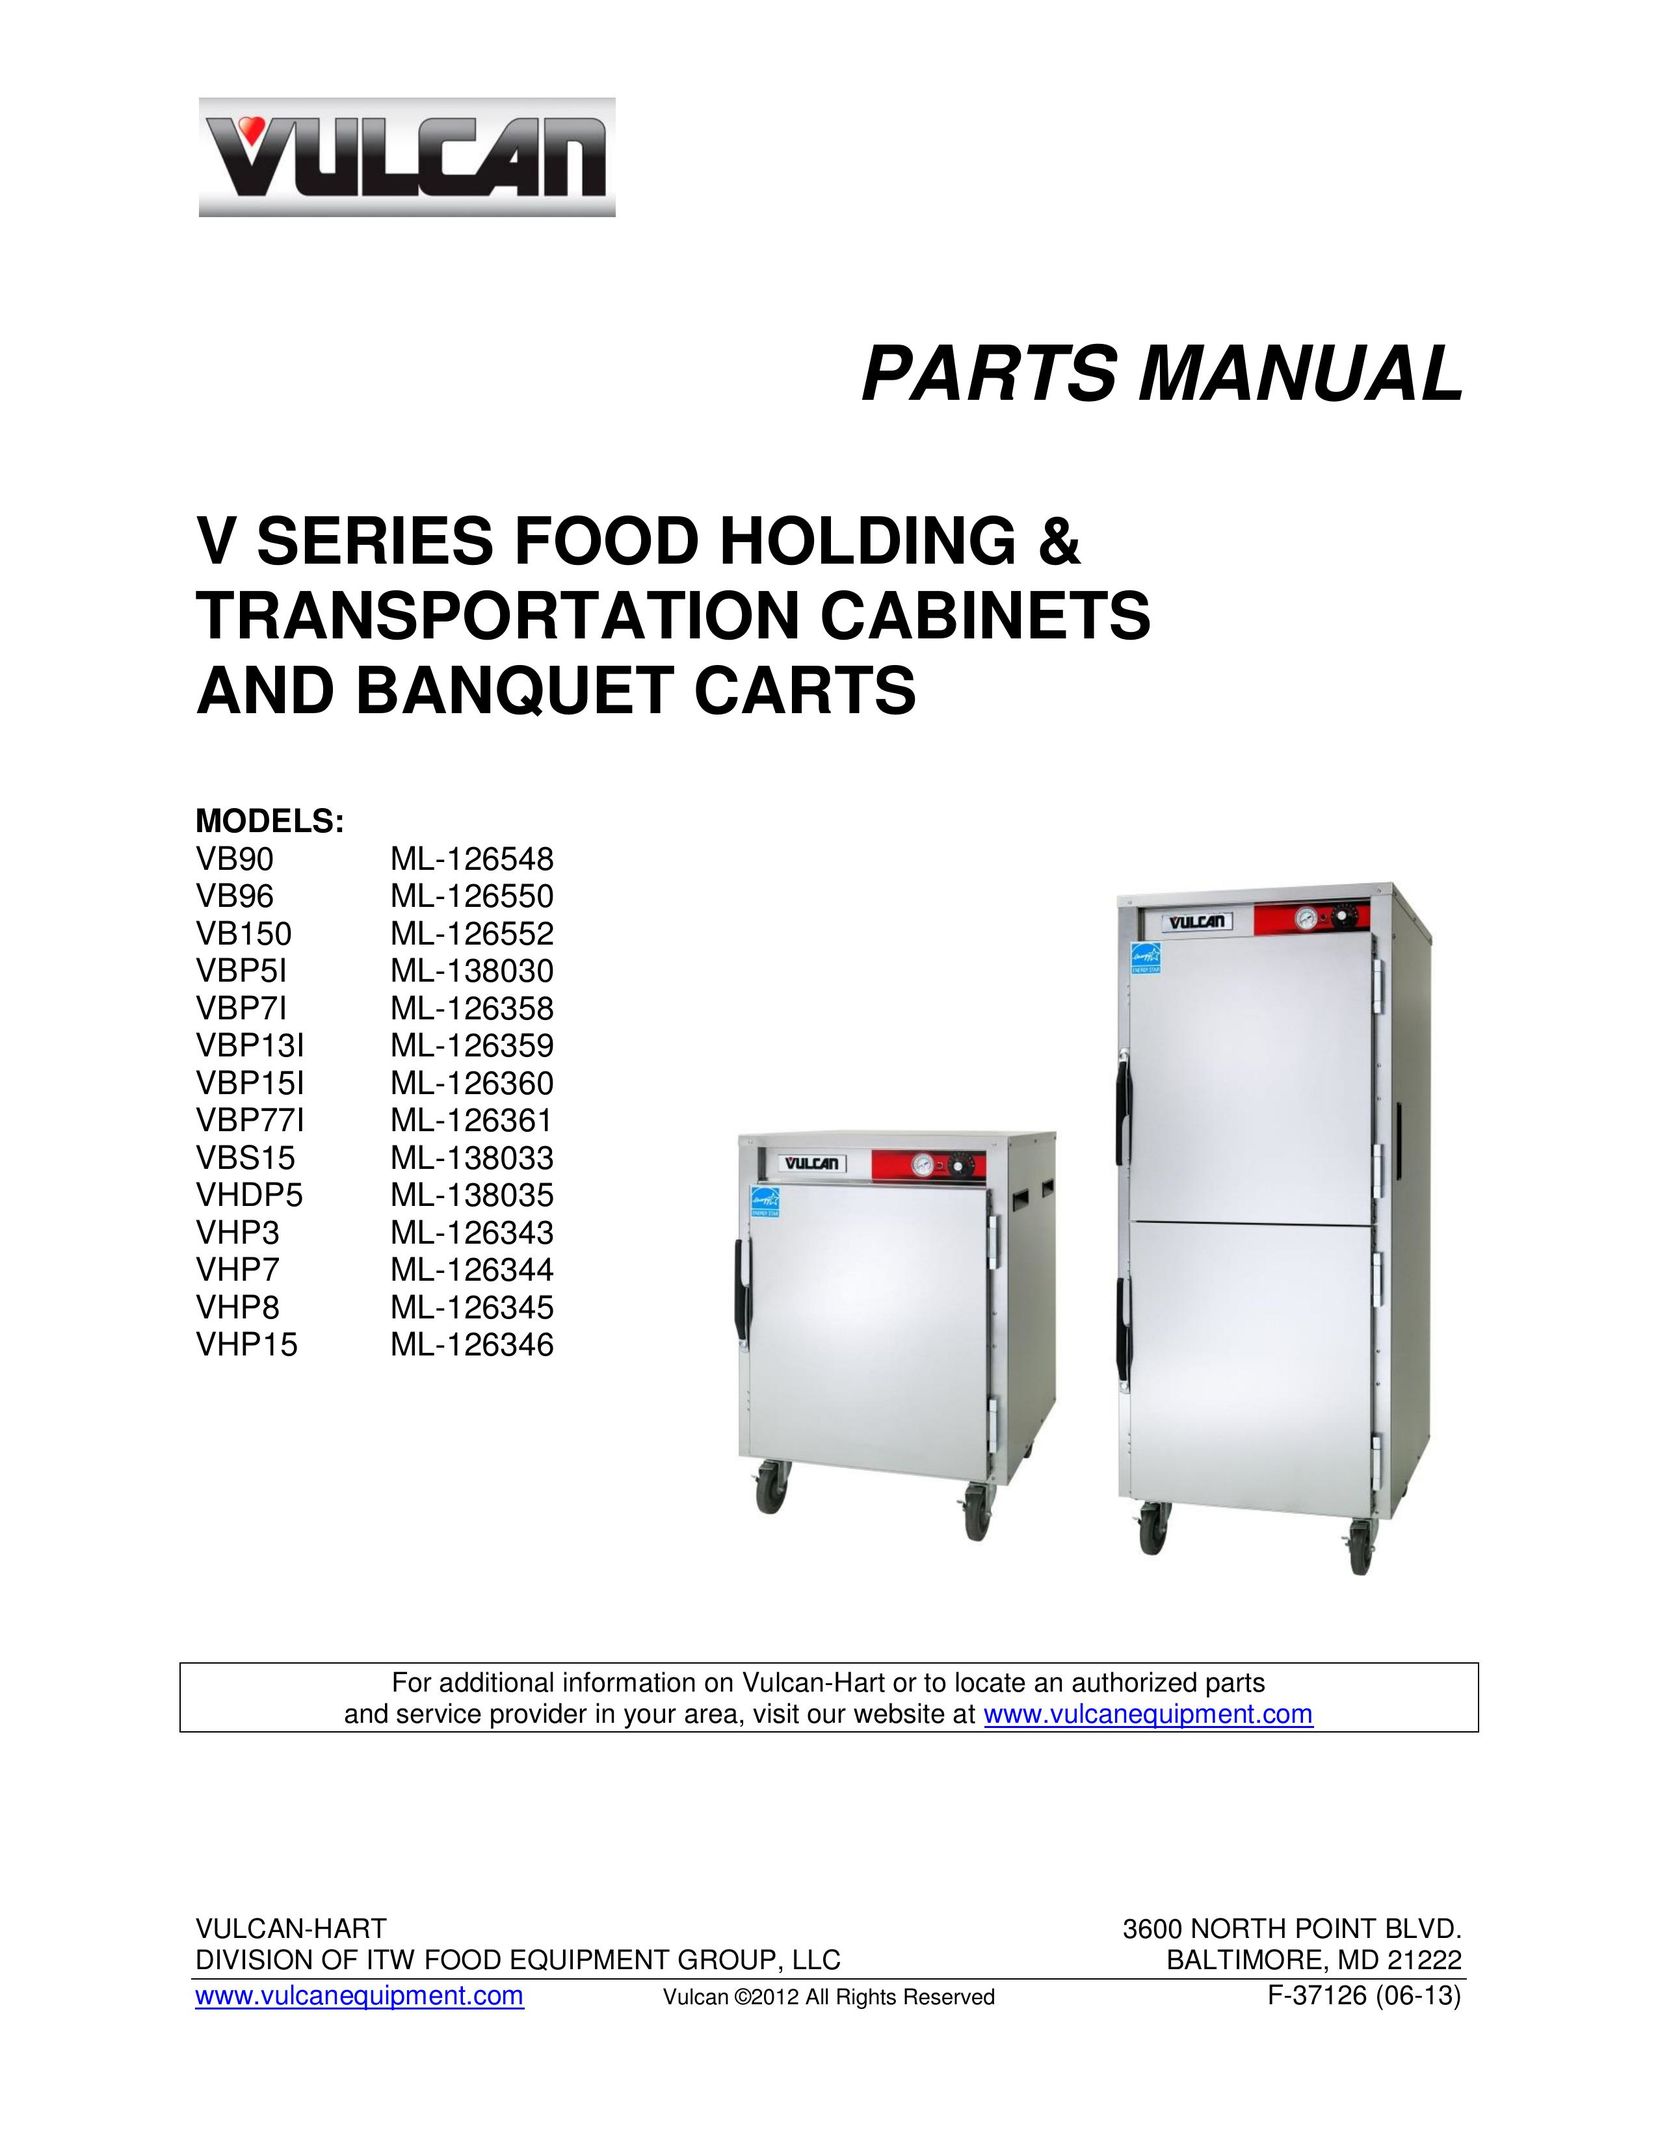 Vulcan-Hart VHP7 ML-126344 TV Mount User Manual